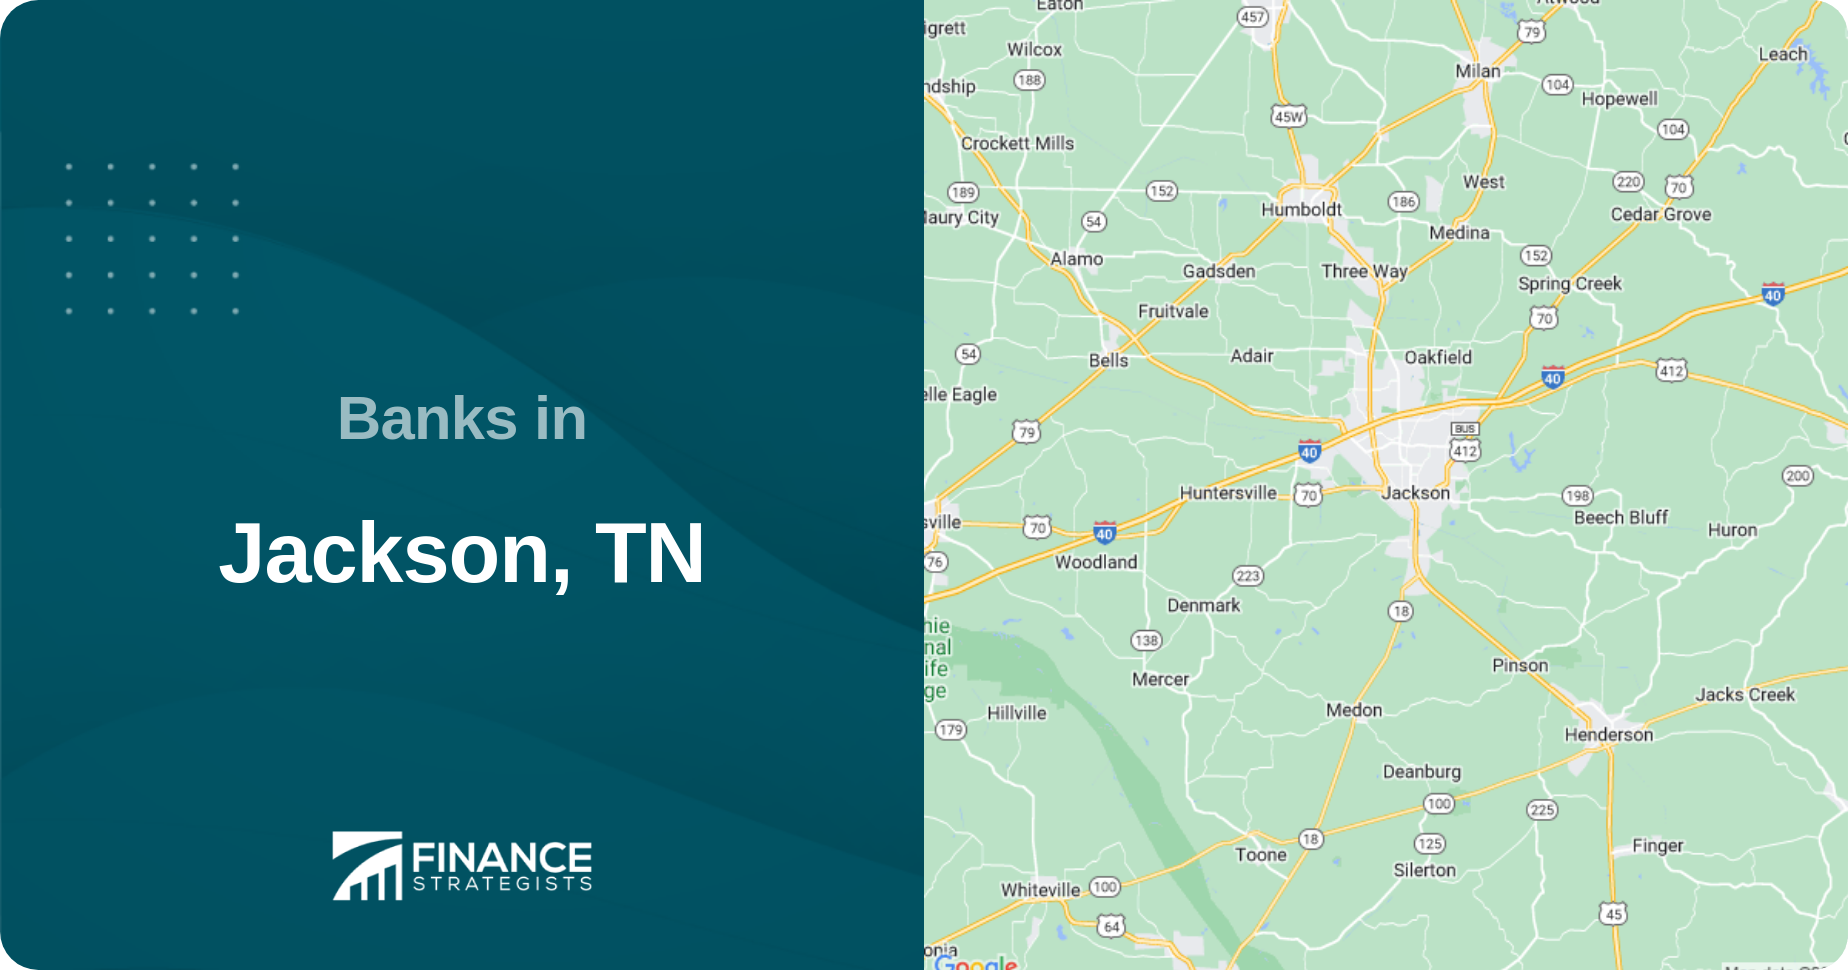 Banks in Jackson, TN